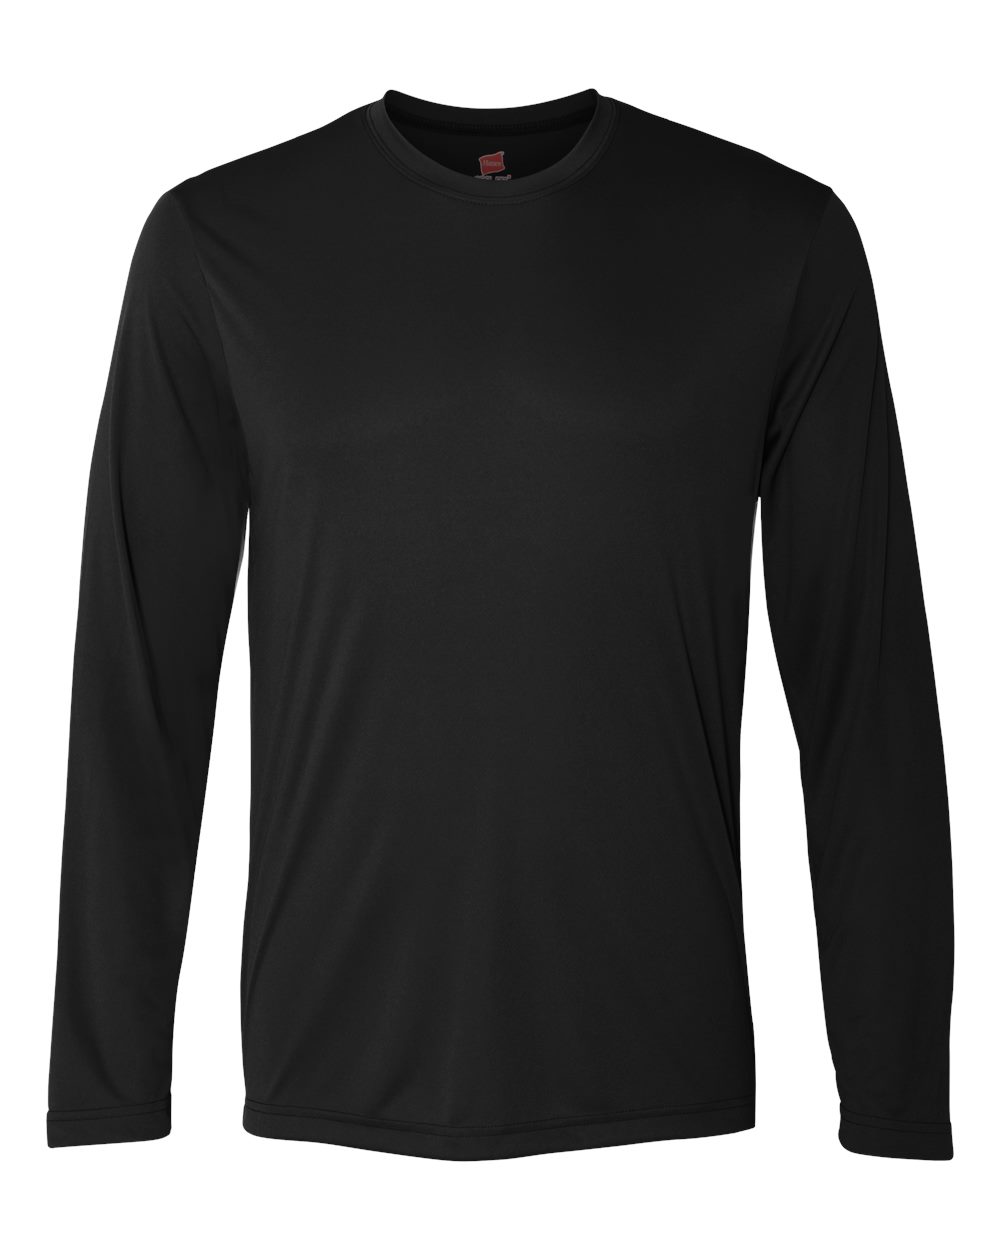 Hanes Mens Cool Dri Long Sleeve Performance T Shirt Blank Plain 482L up to 3XL | eBay